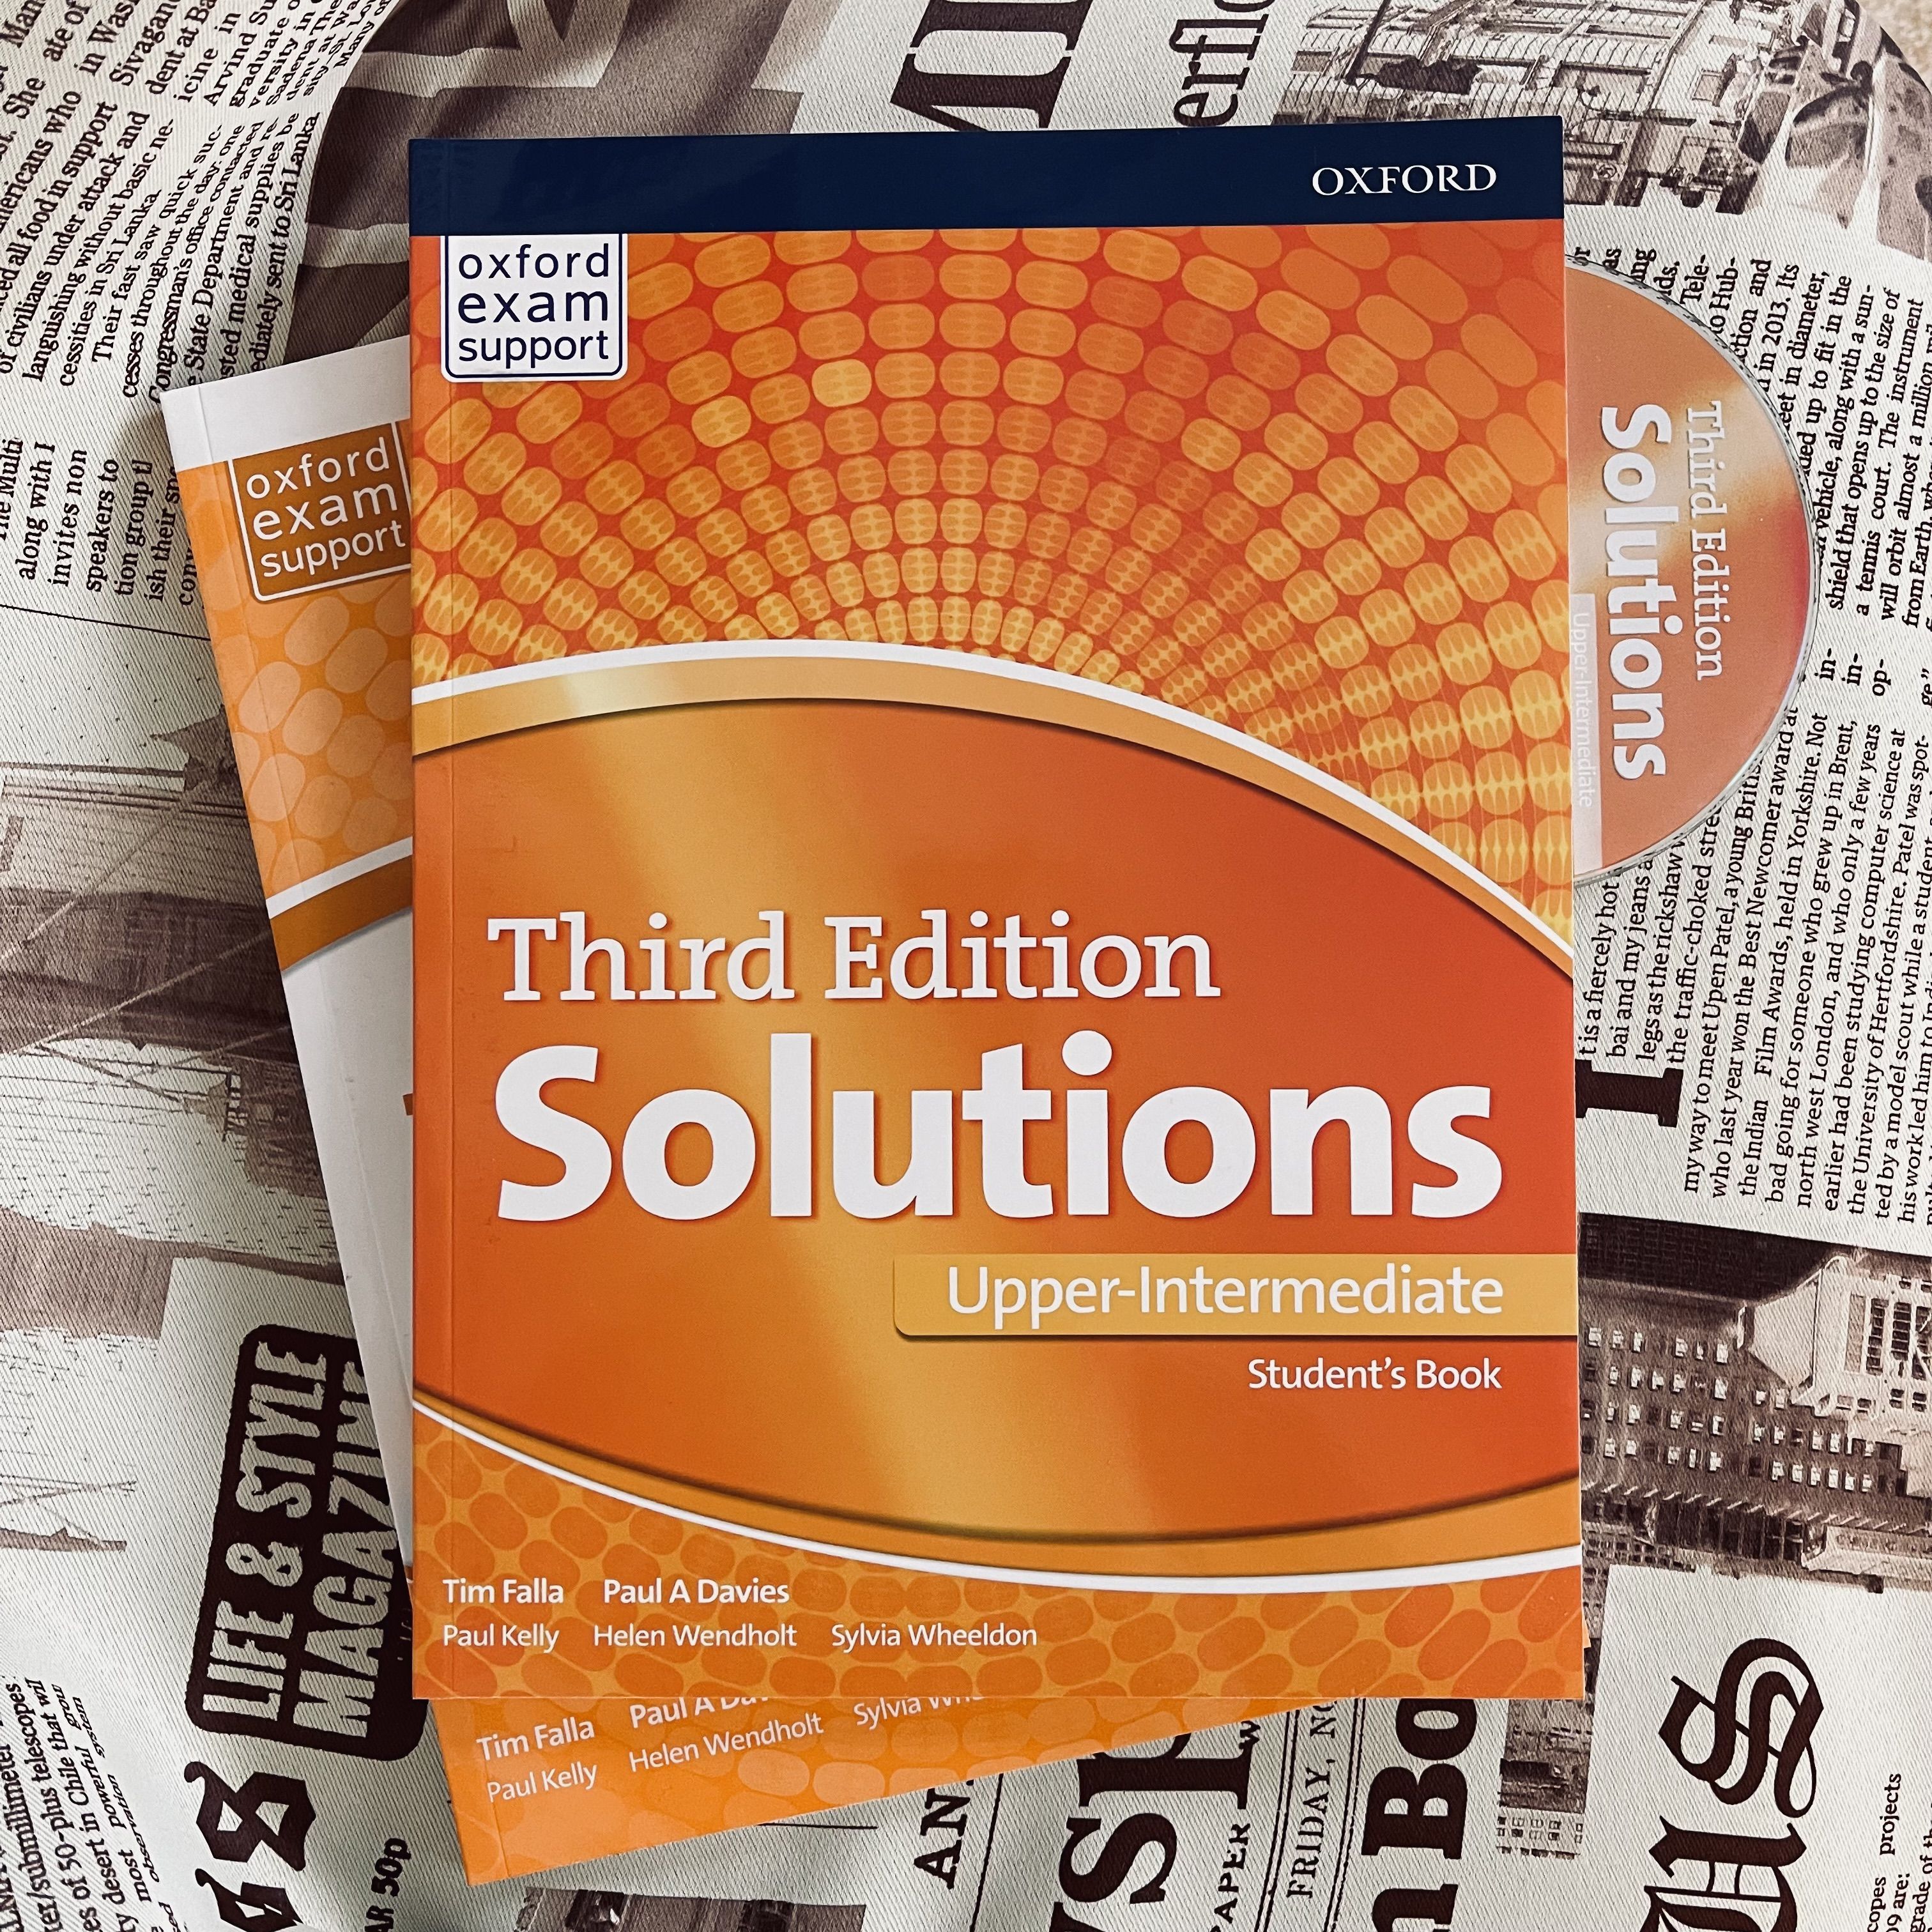 Solution upper intermediate students book. Solutions: Upper-Intermediate. Solutions Upper Intermediate student's book. Solutions books. Tim Falla.